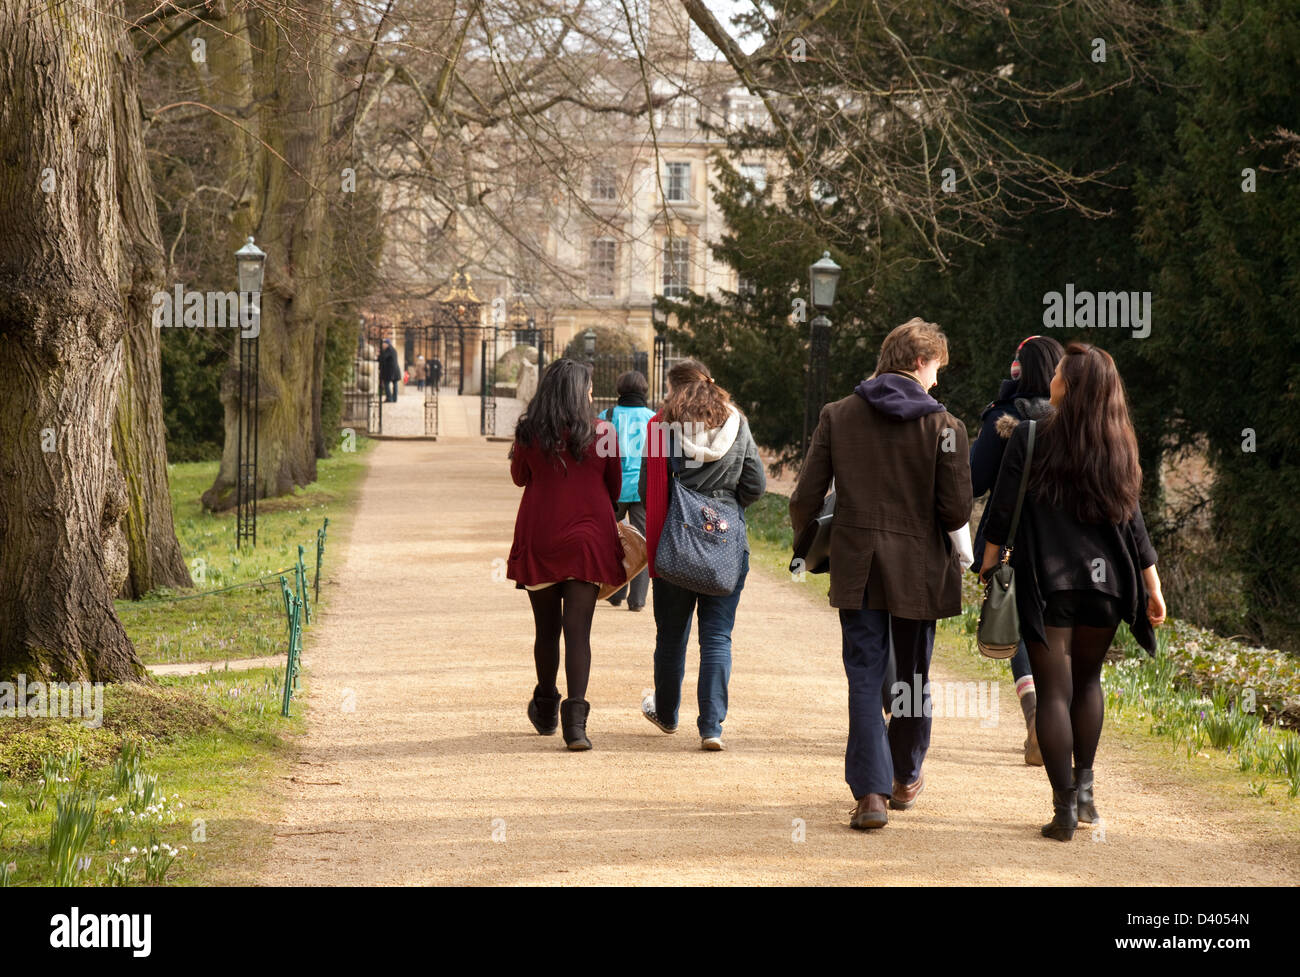 Universitätsstudenten UK; Clare College Cambridge Universitätsstudenten, die an der Hochschule spazieren, Cambridge, Großbritannien Stockfoto